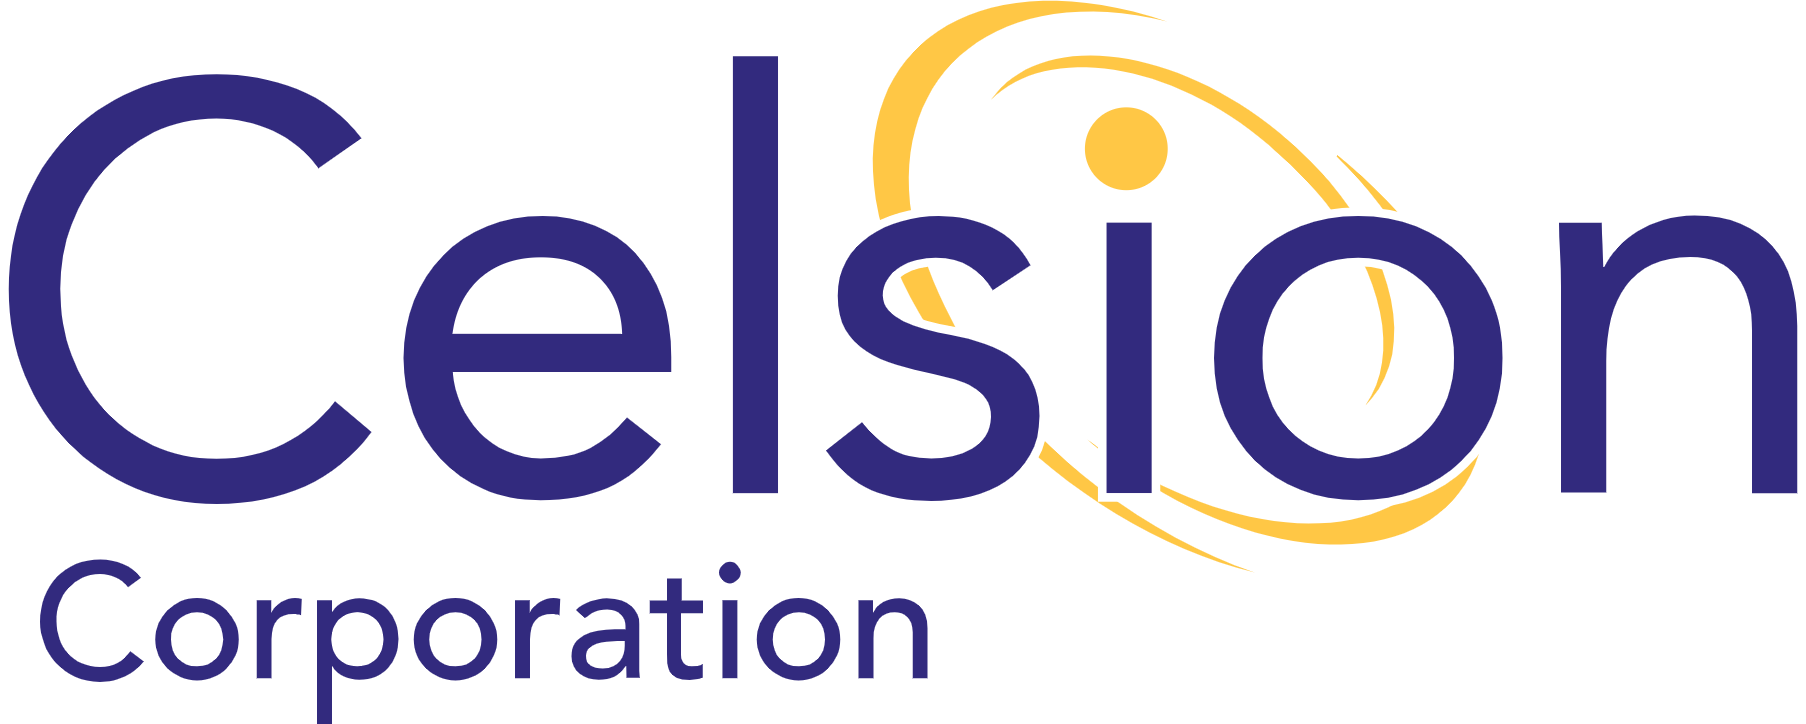 Celsion Corporation
 logo large (transparent PNG)